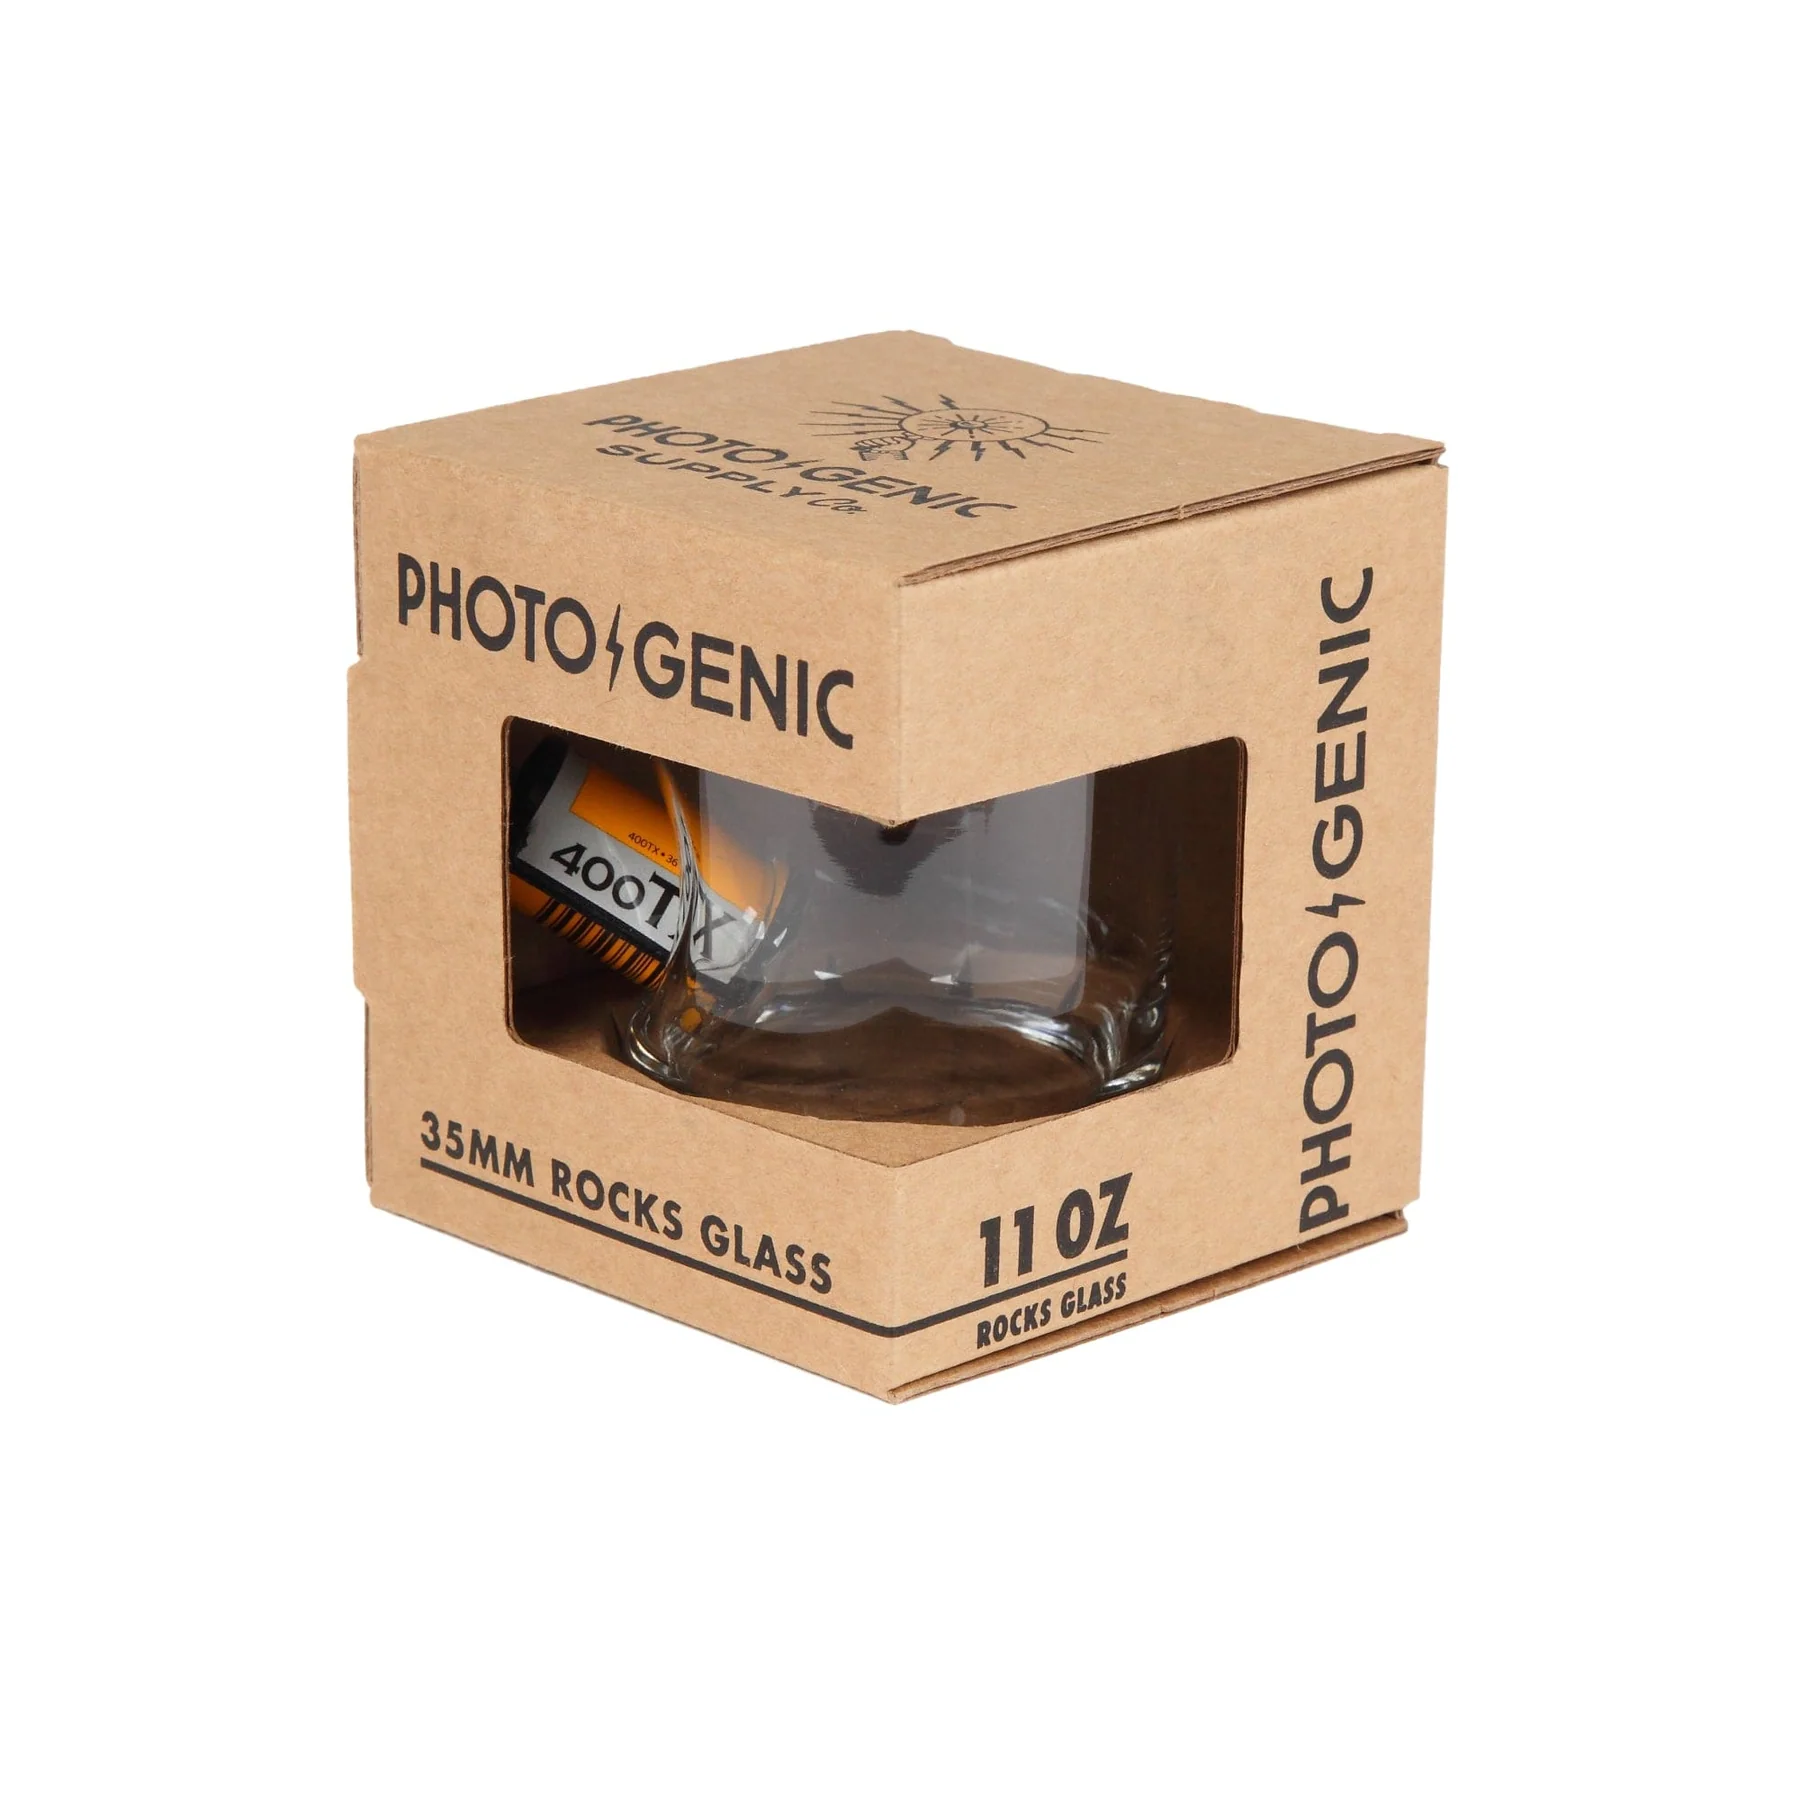 PhotoGenic Supply 35mm Rocks Glass TX 400